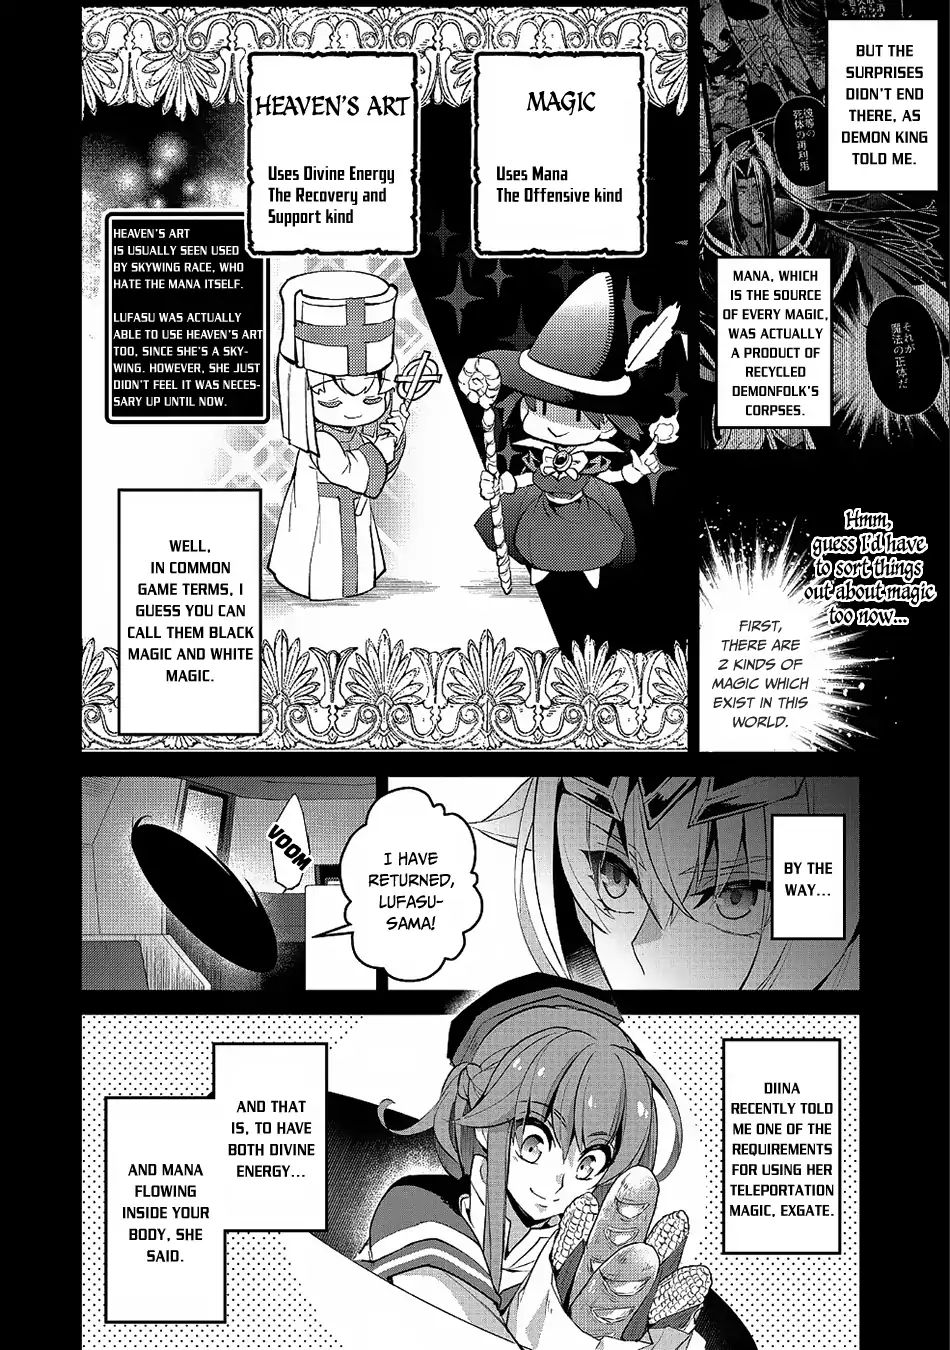 Yasei no Last Boss ga Arawareta! Vol.1 Chapter 21: A Battleship